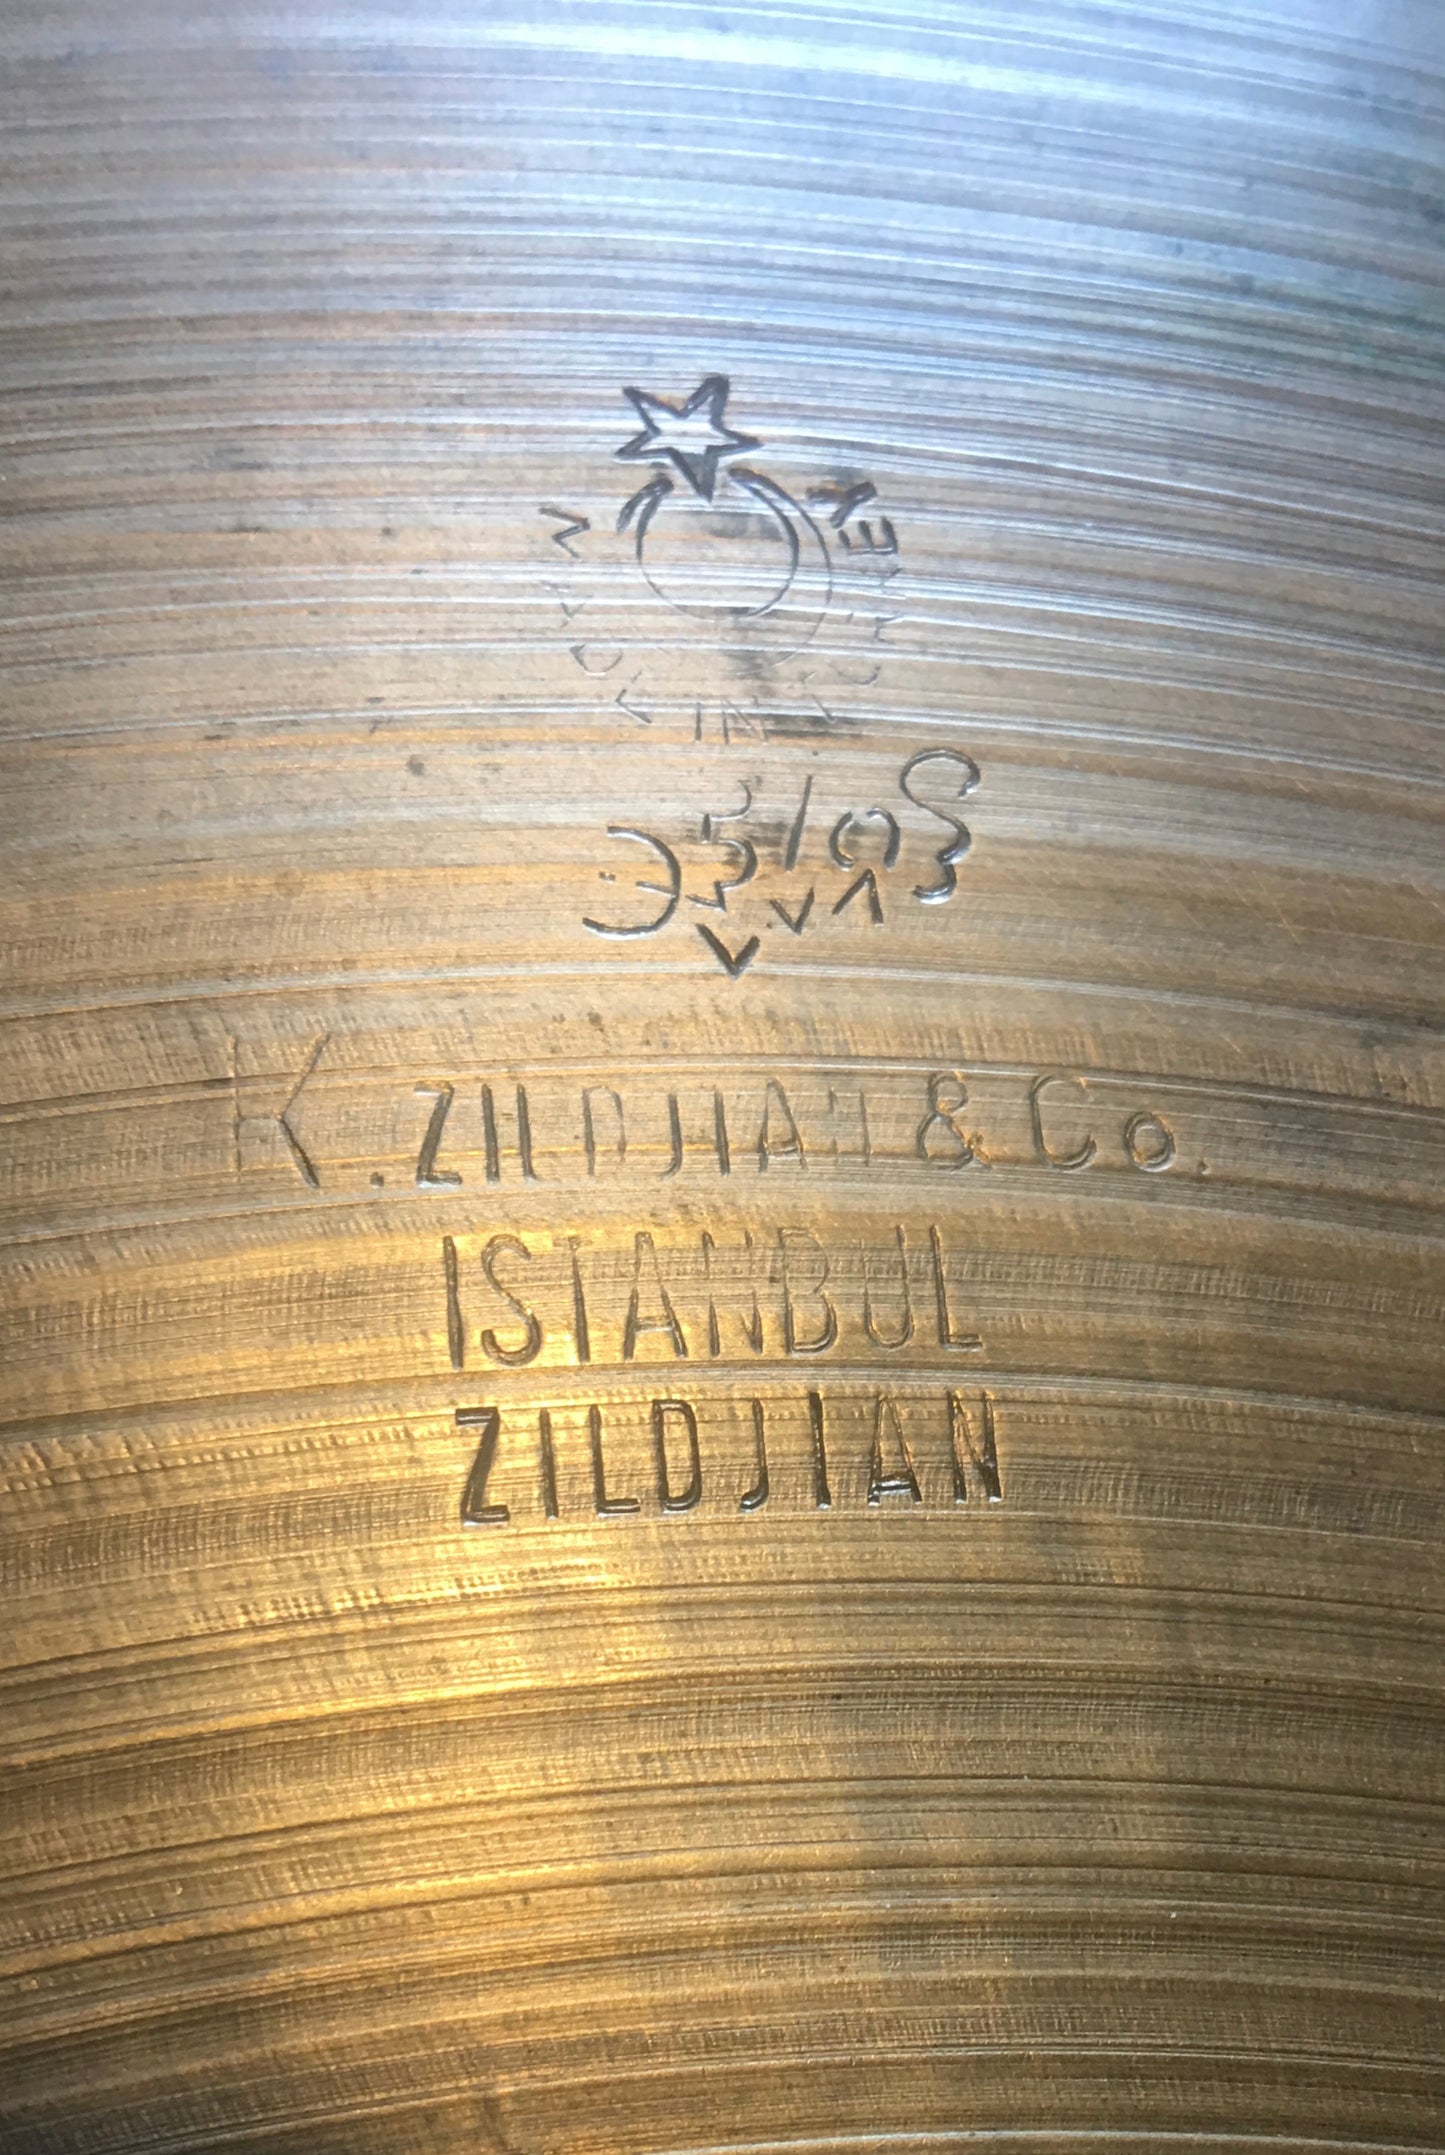 14" K Zildjian Istanbul Hi-Hat Cymbals New Stamp 790/798g #472